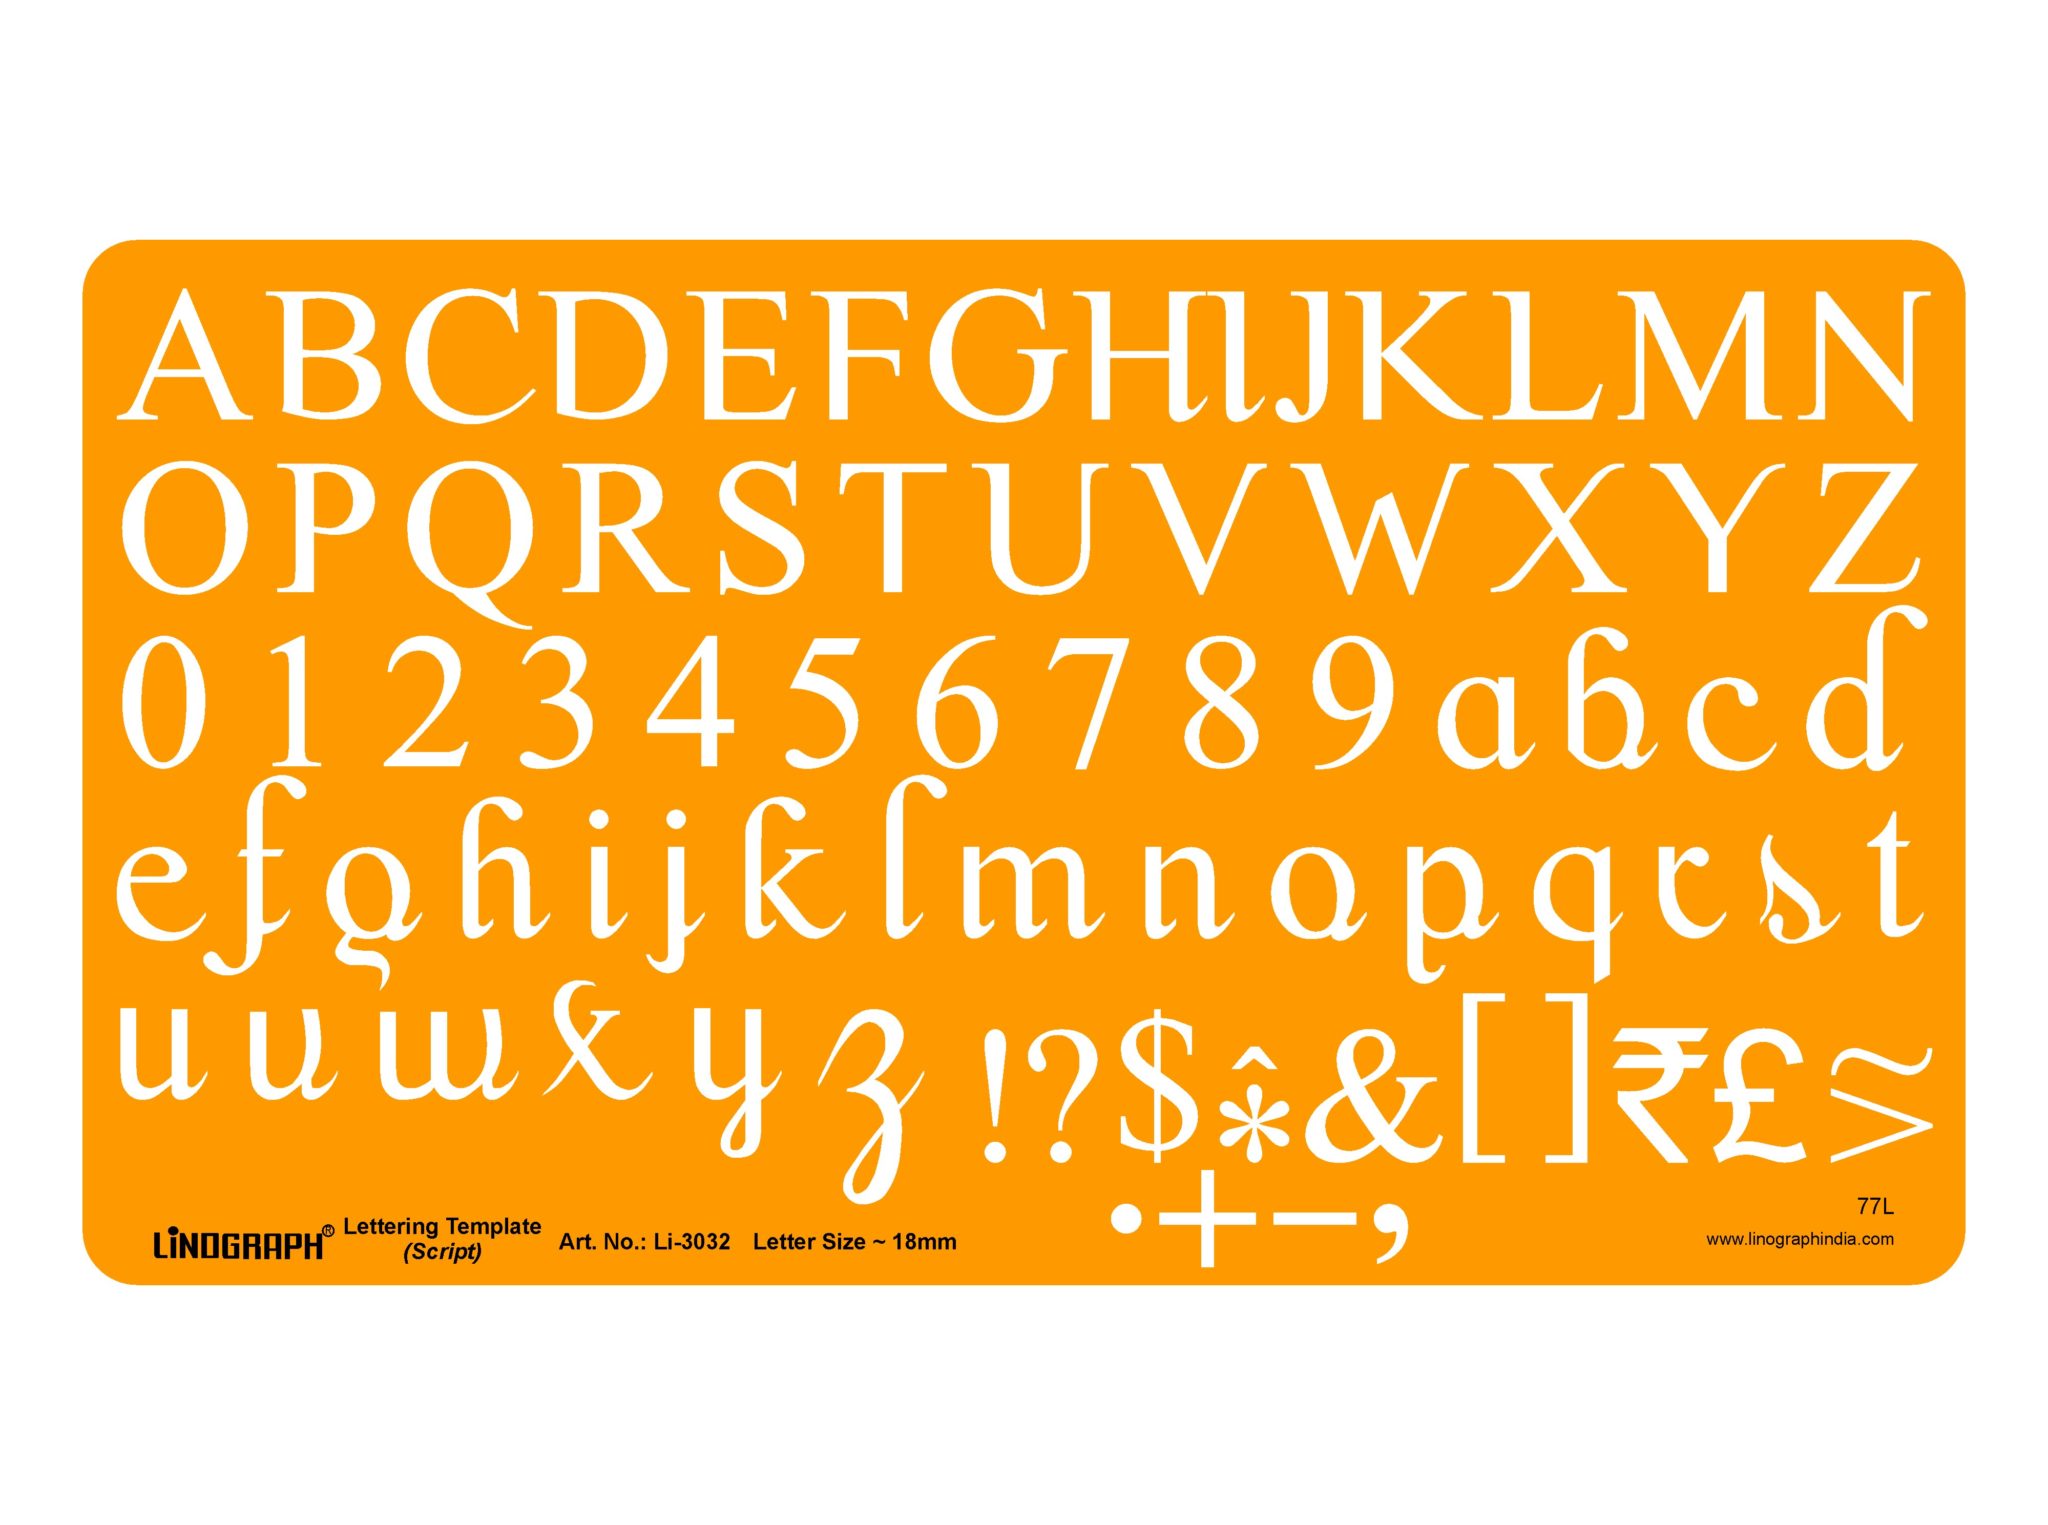 Li 3032 Lettering Template (Script) Letter Size ~ 18mm